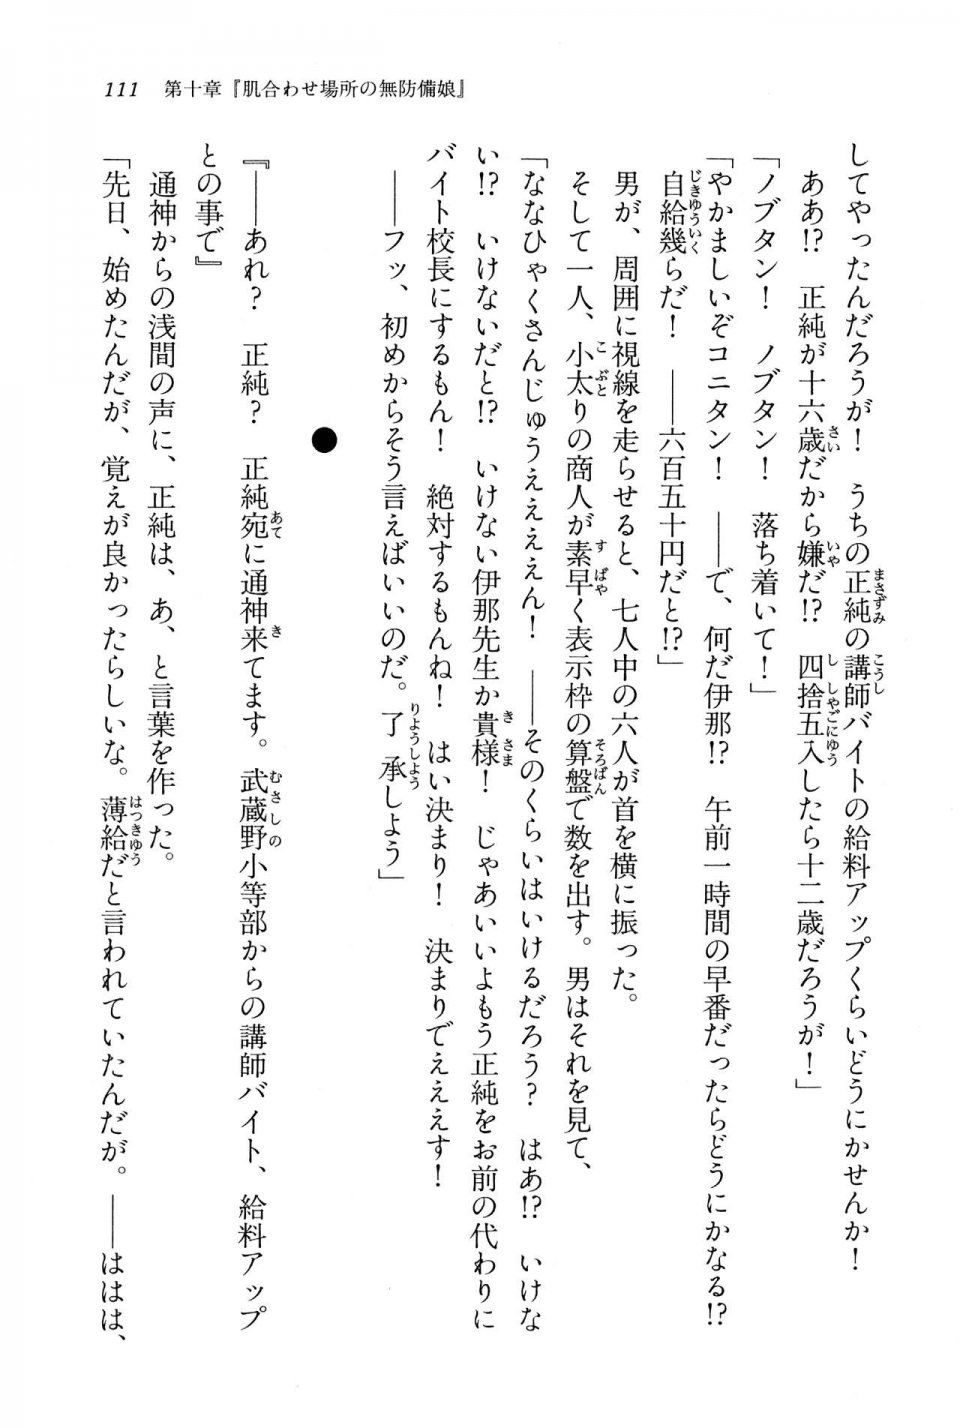 Kyoukai Senjou no Horizon BD Special Mininovel Vol 8(4B) - Photo #115